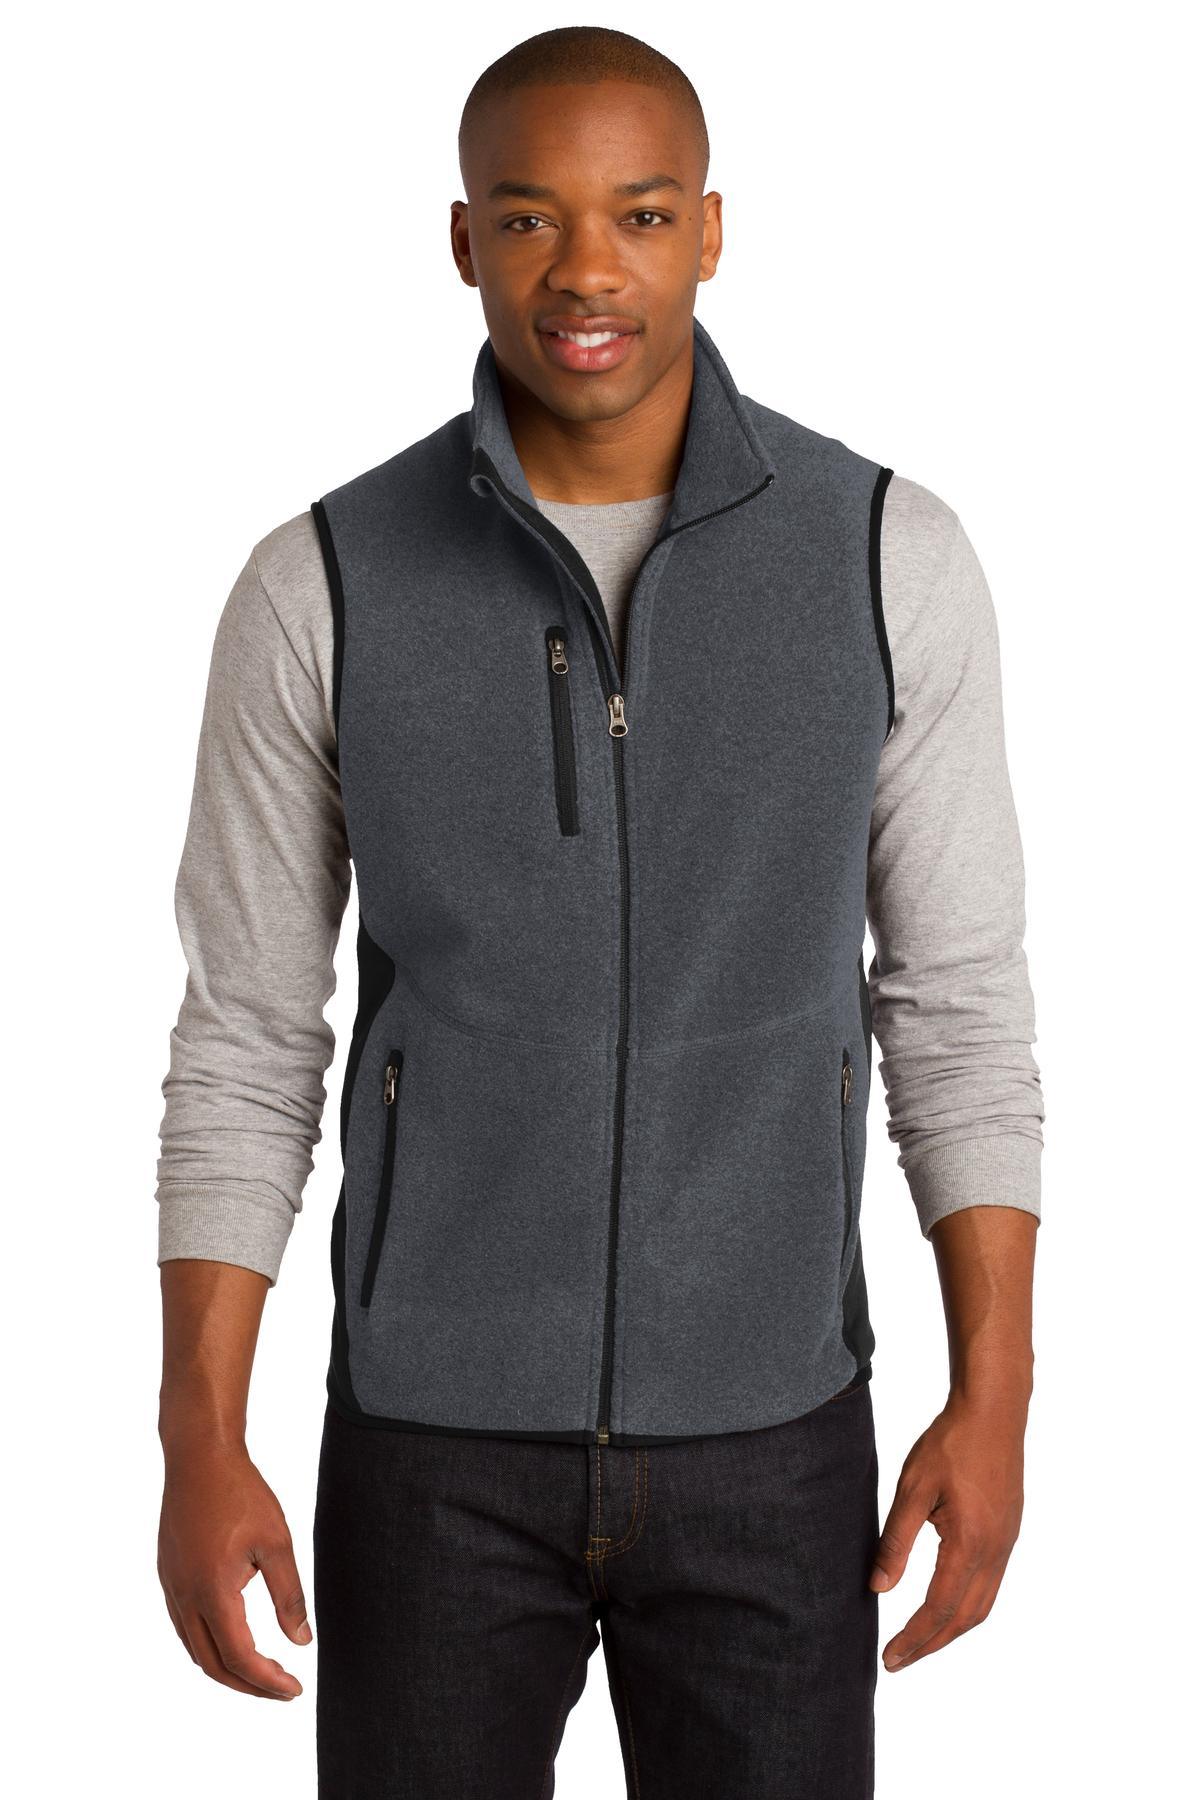 Port Authority R-Tek Pro Fleece Full-Zip Vest. F228 - Dresses Max